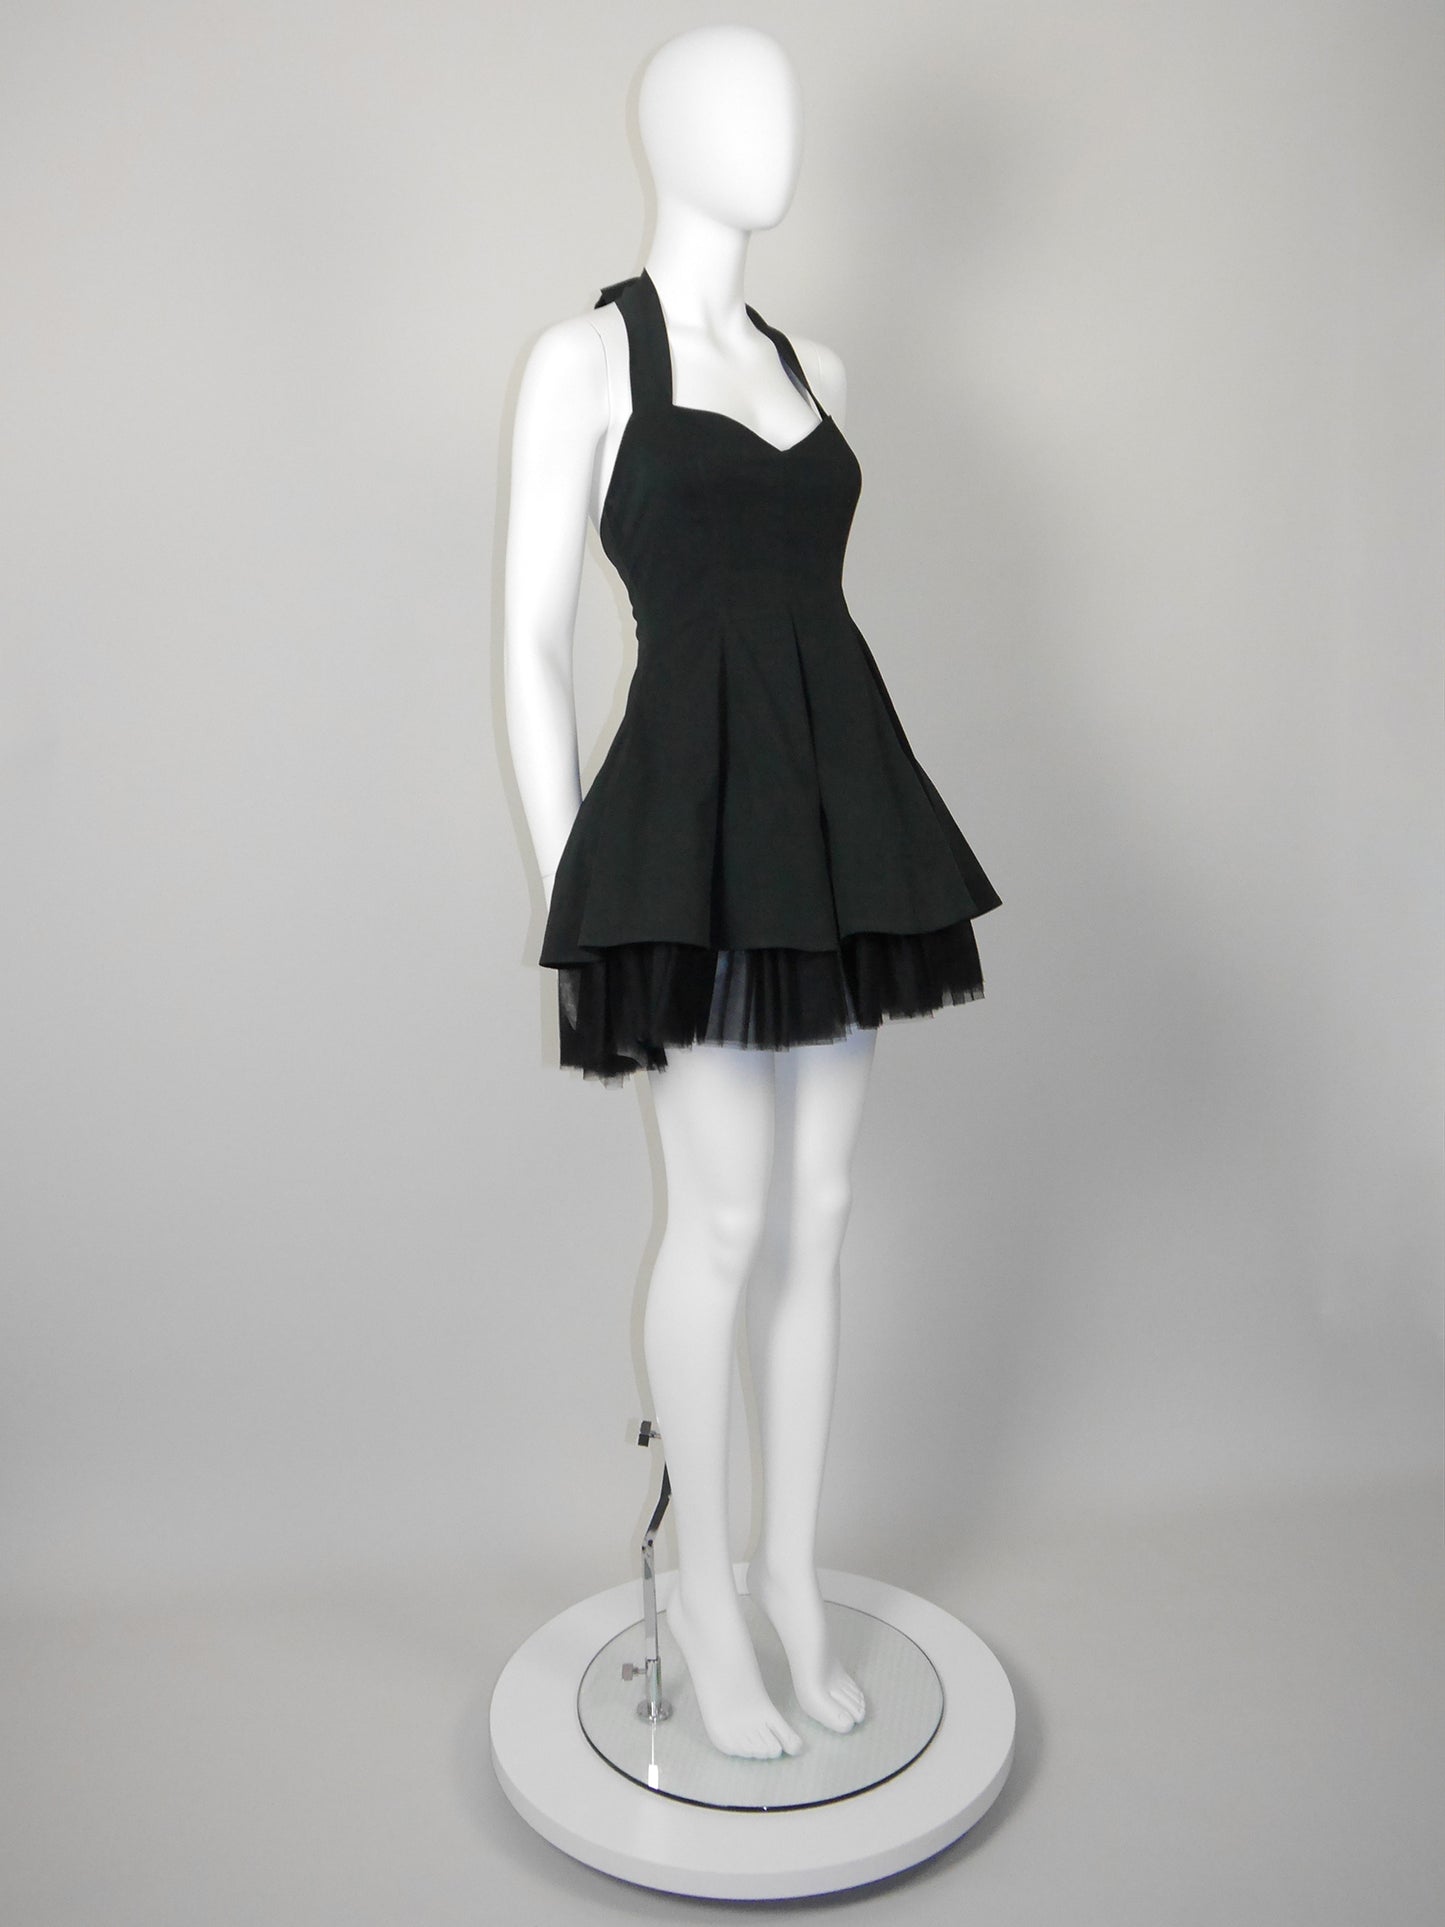 DOLCE & GABBANA Spring 1992 Vintage Backless Mini Dress w/ Tulle Skirt Runway Design Size M